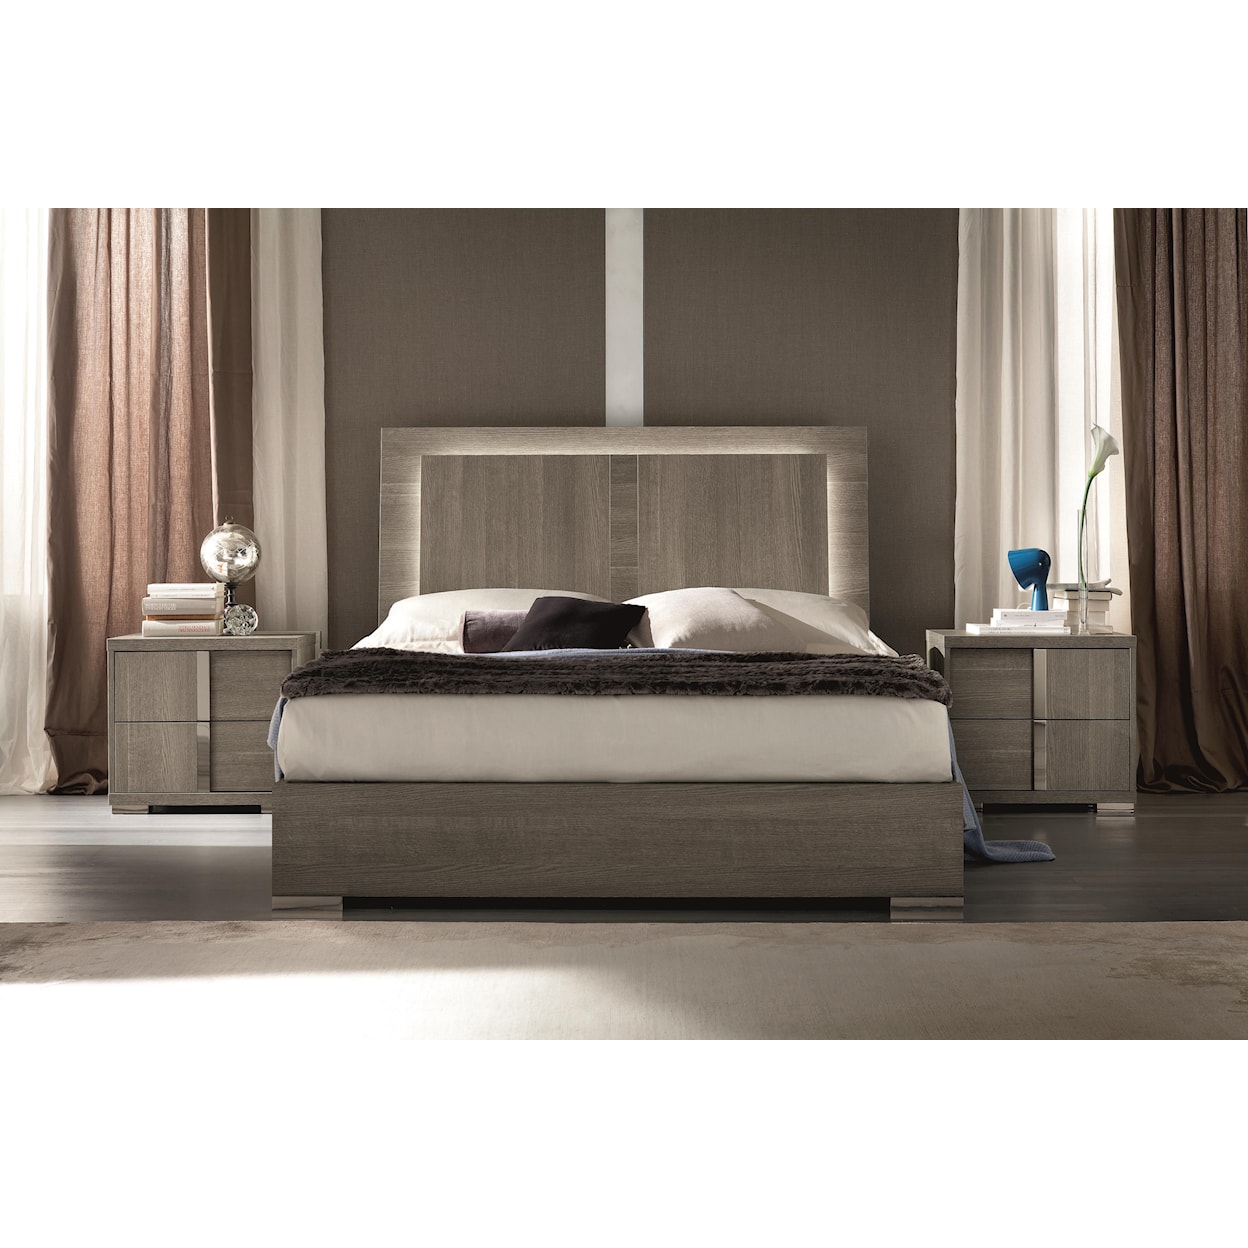 Alf Italia Tivoli King Bed with LED Light